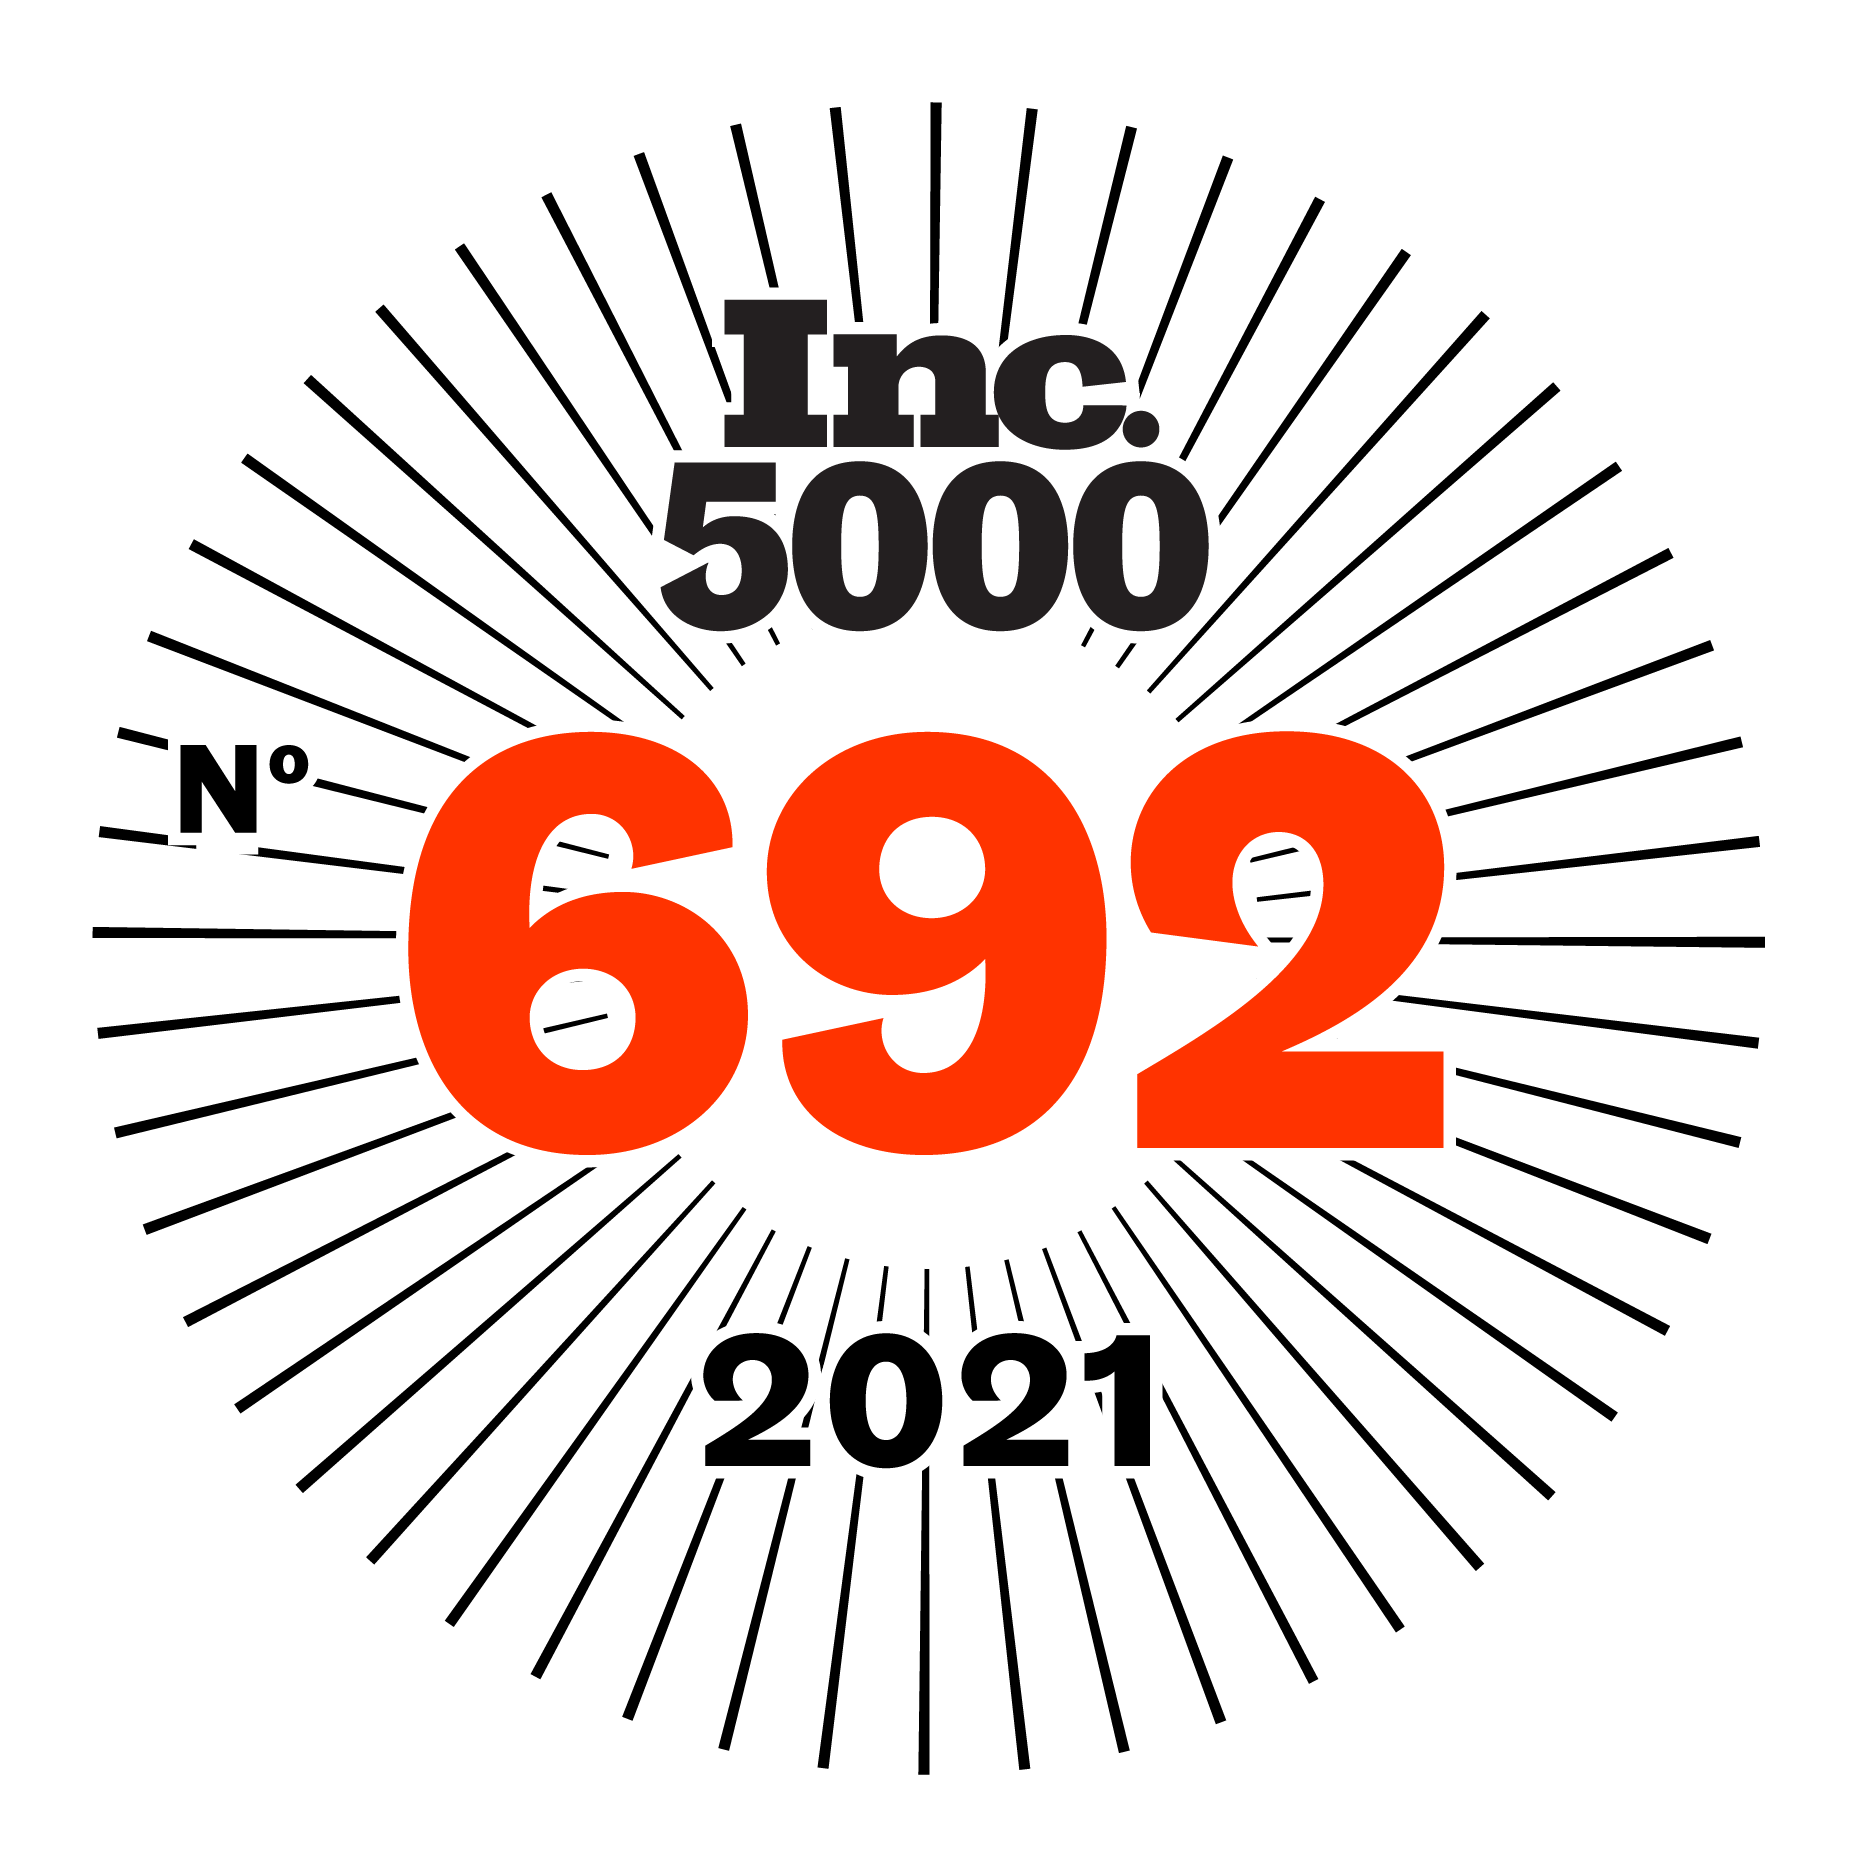 SanDow Construction Inc. 5000 Award Logo 2021.